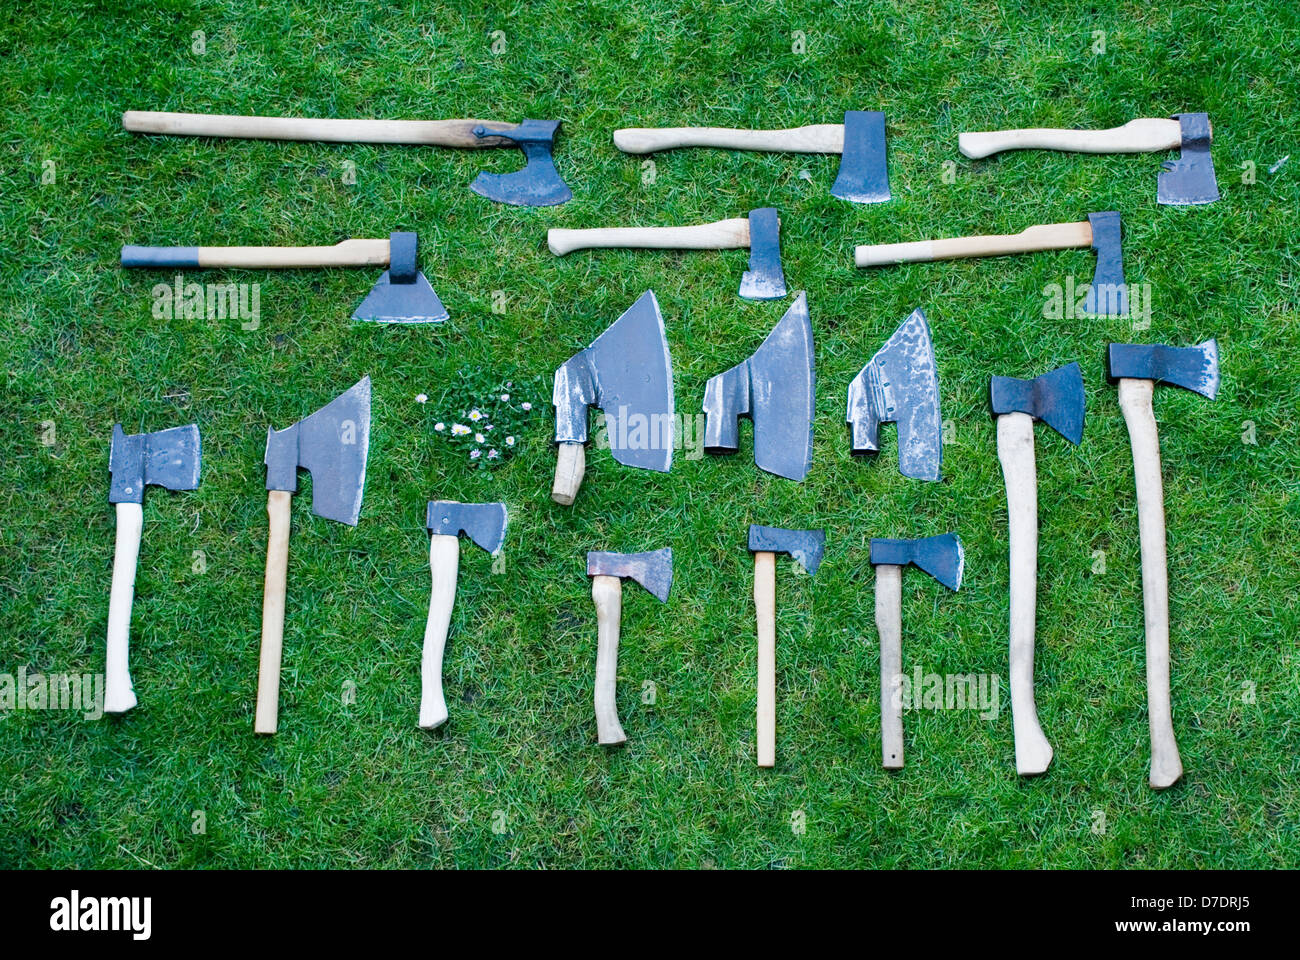 collection of axes Stock Photo